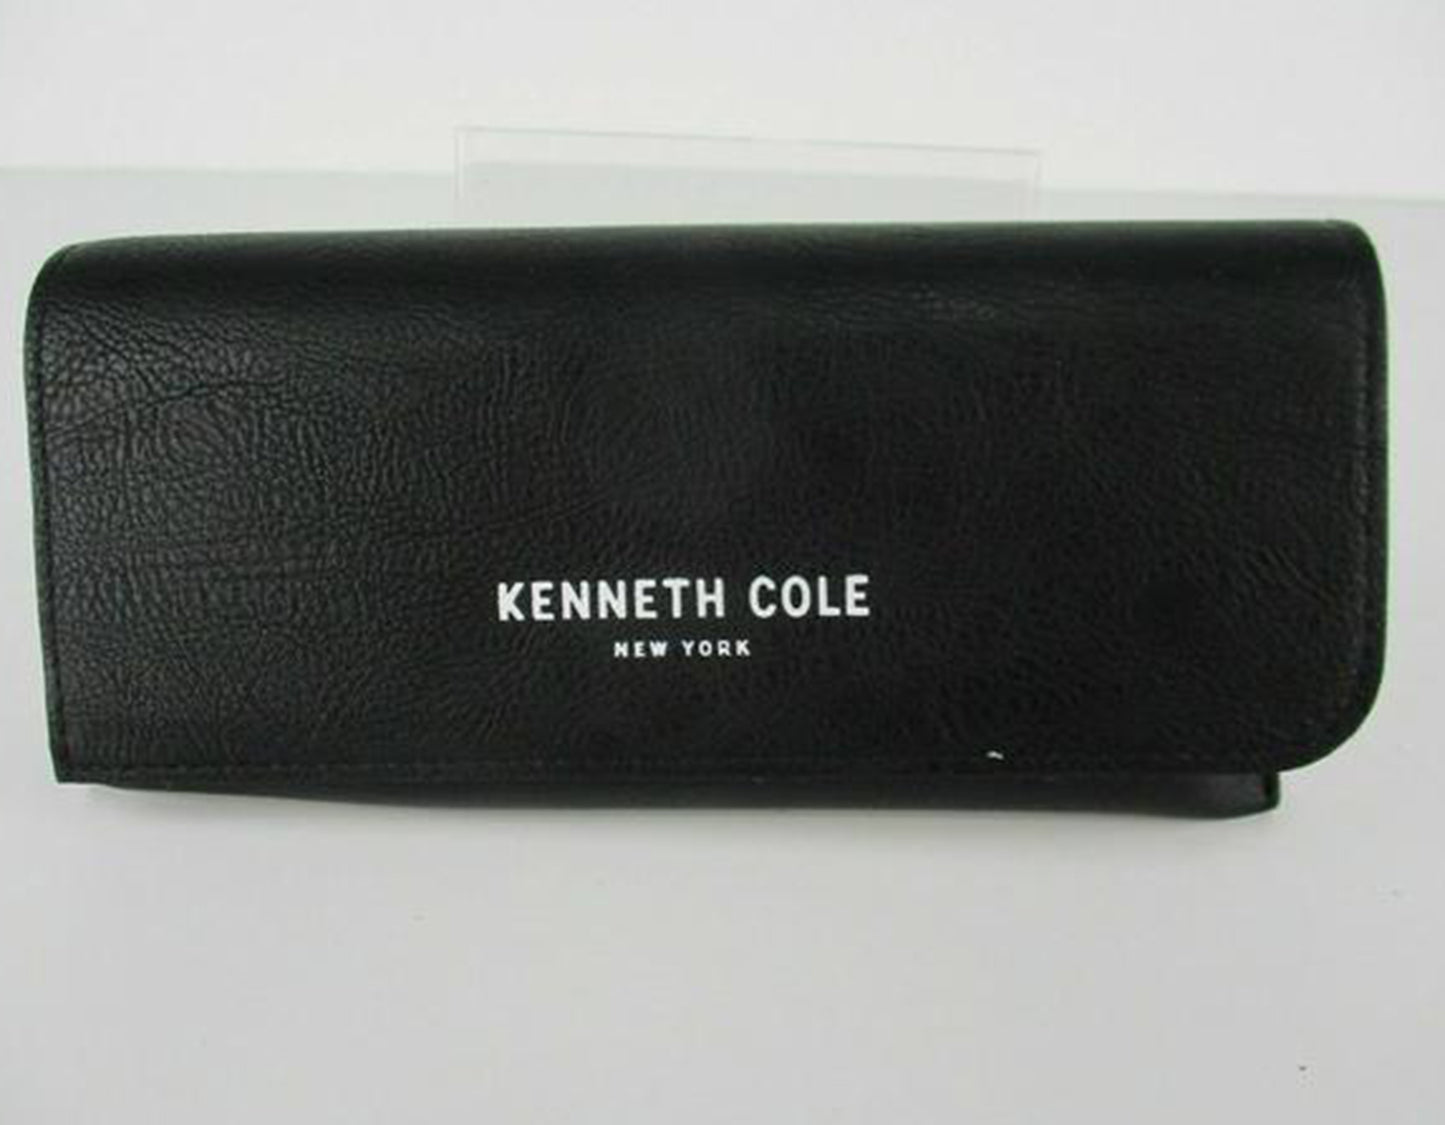 Kenneth Cole Reaction KC0875-092-55 55mm New Eyeglasses